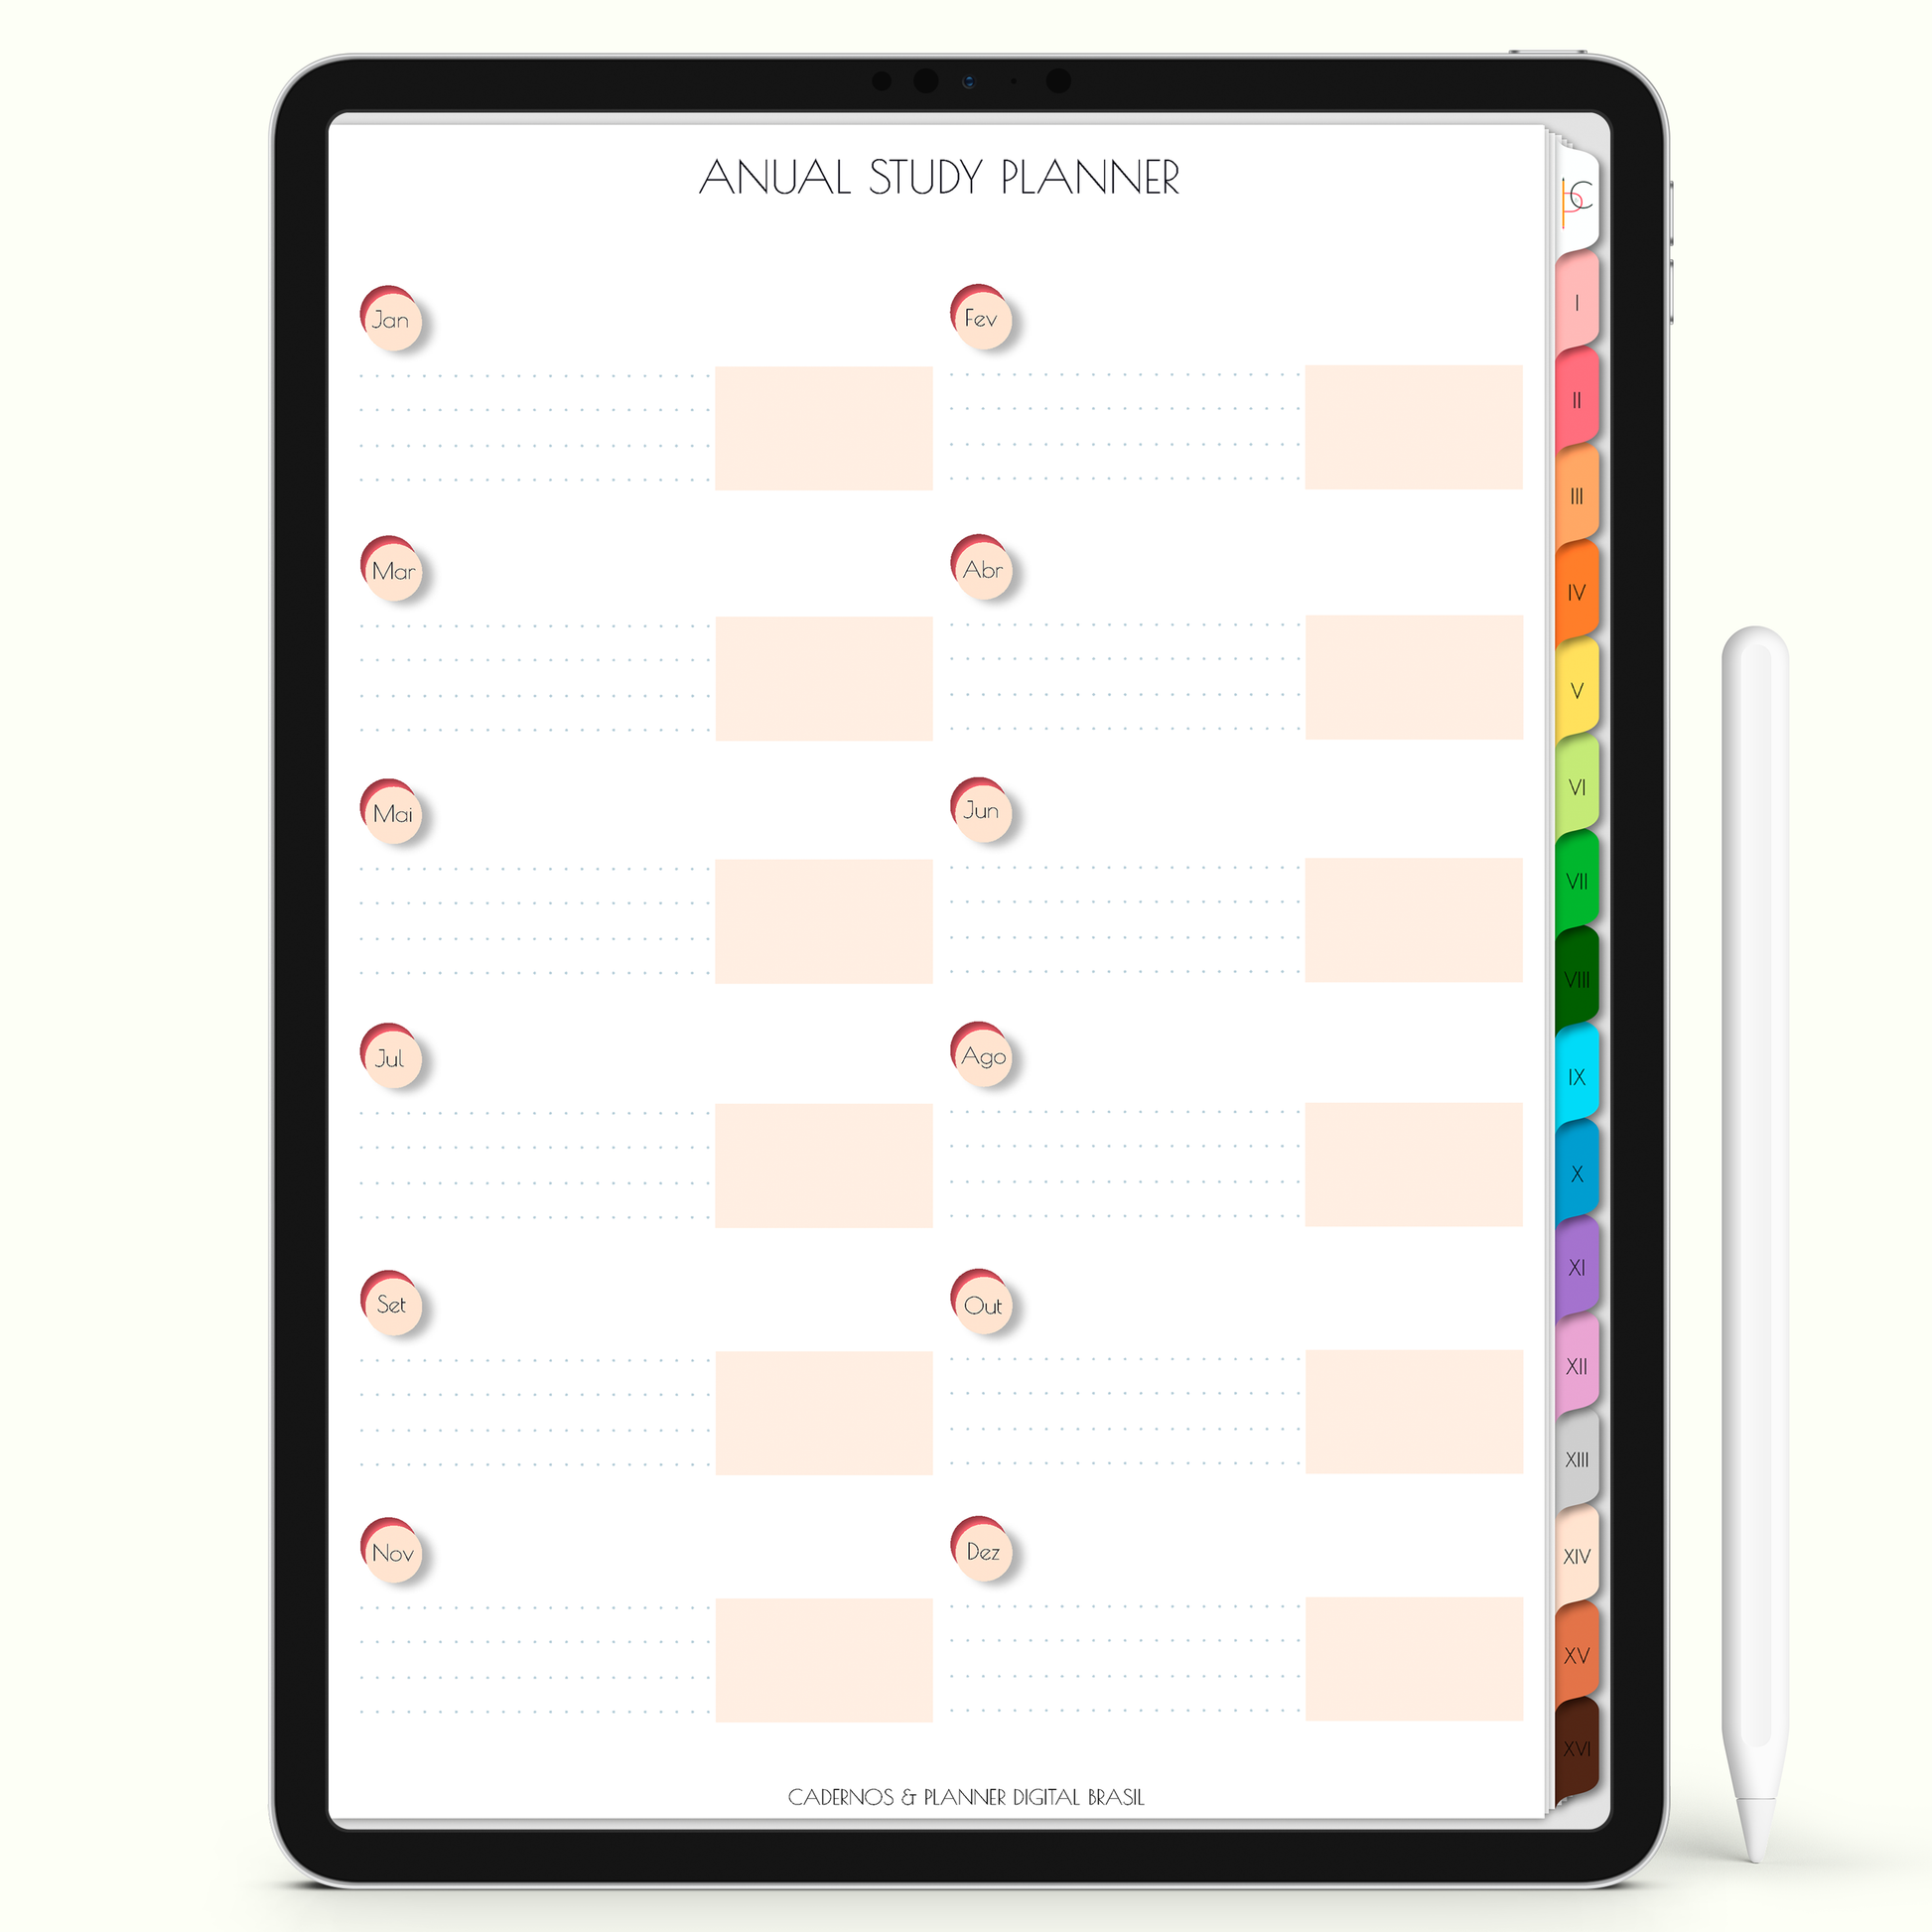 Caderno Digital Colors 16 Matérias - página anual Study Planner para iPad e Tablet Android. Cadernos & Planner Digital Brasil